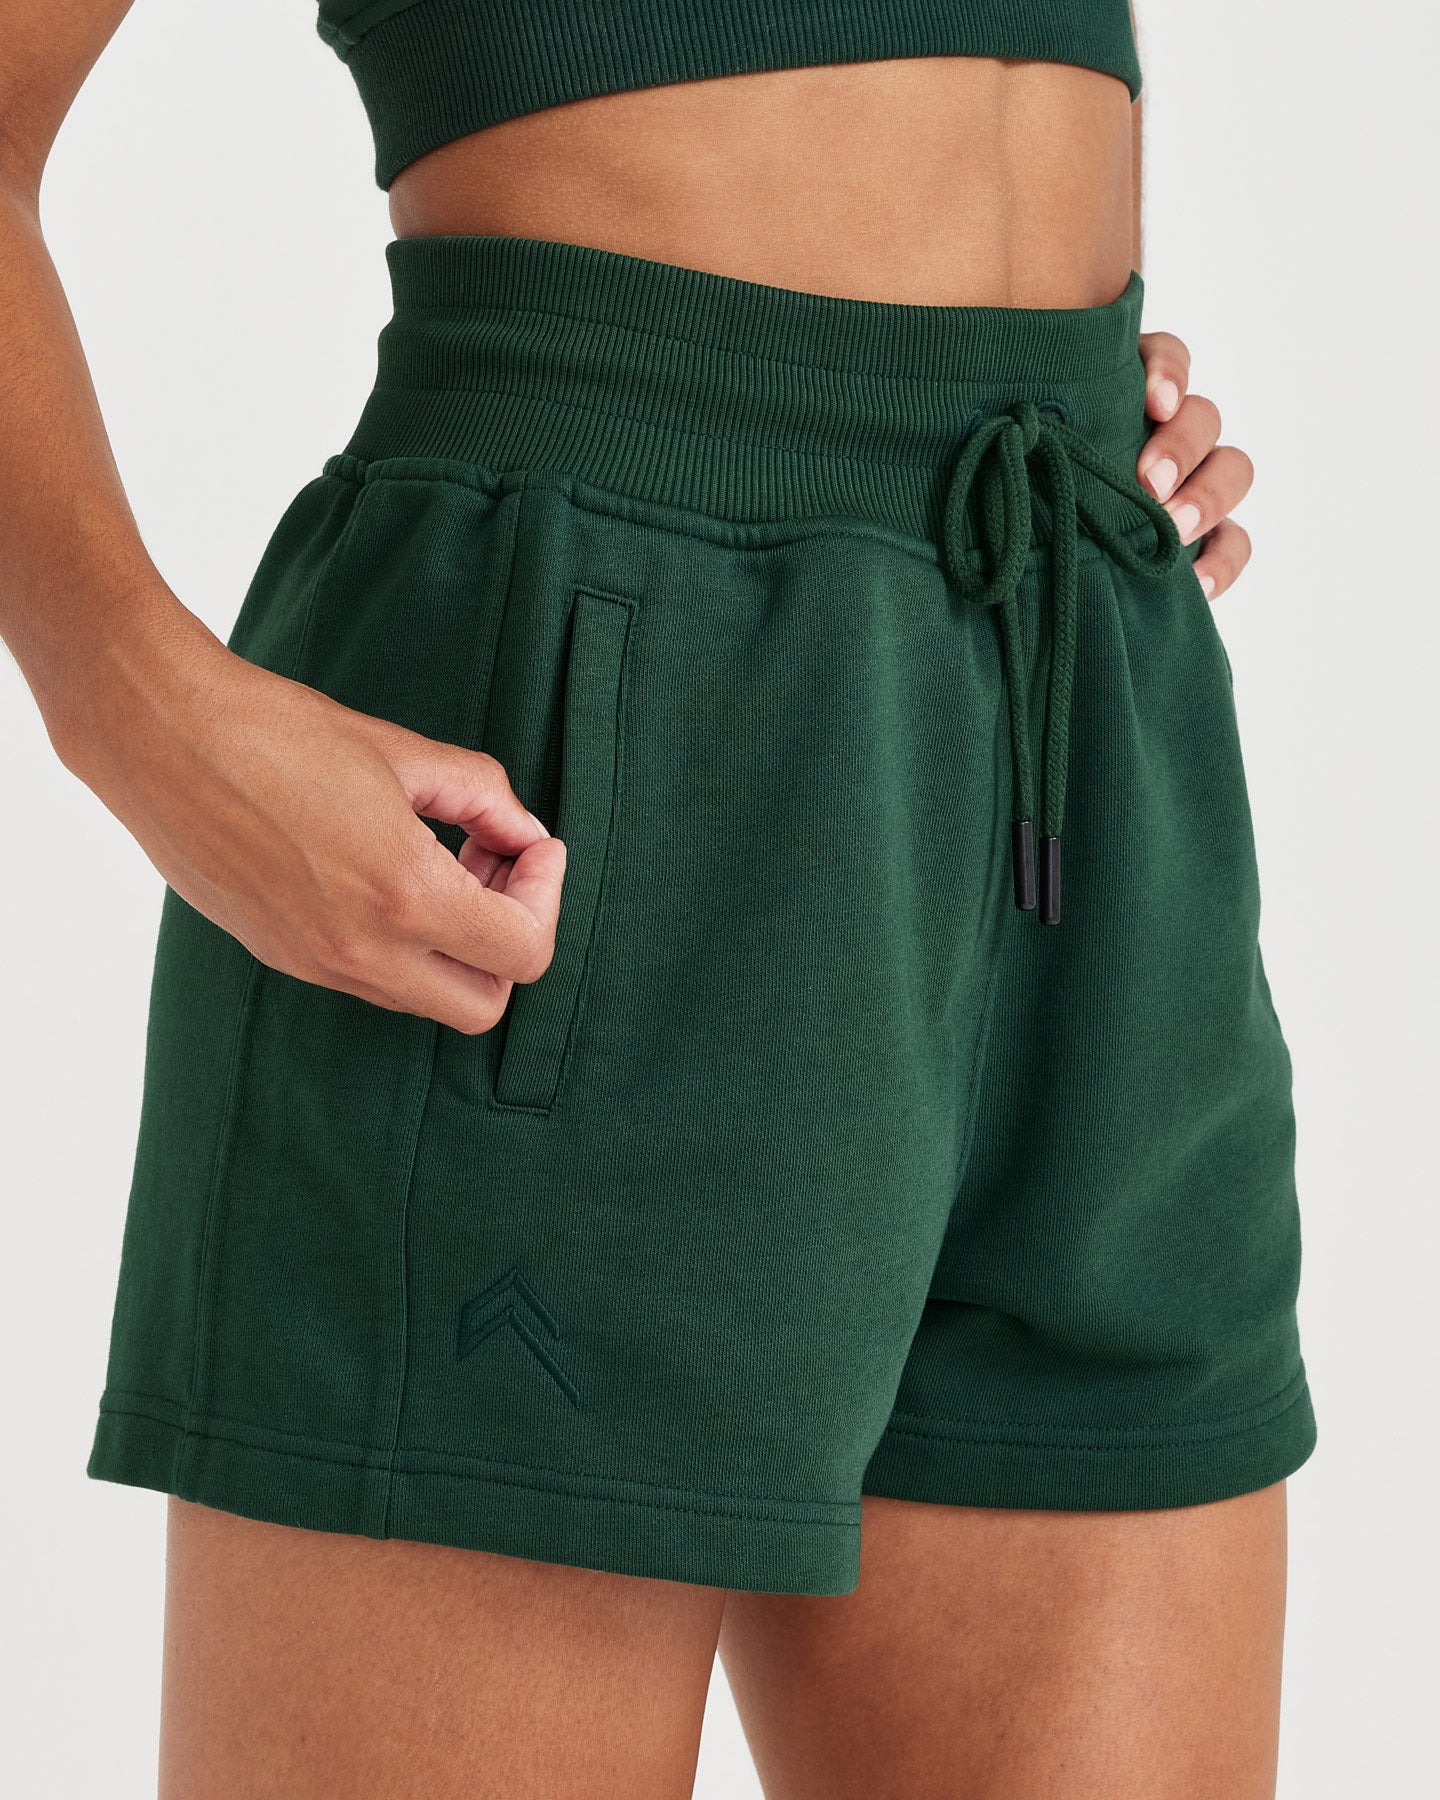 Top-Marke Best Lightweight Shorts for Summer | US - Active Oner Evergreen